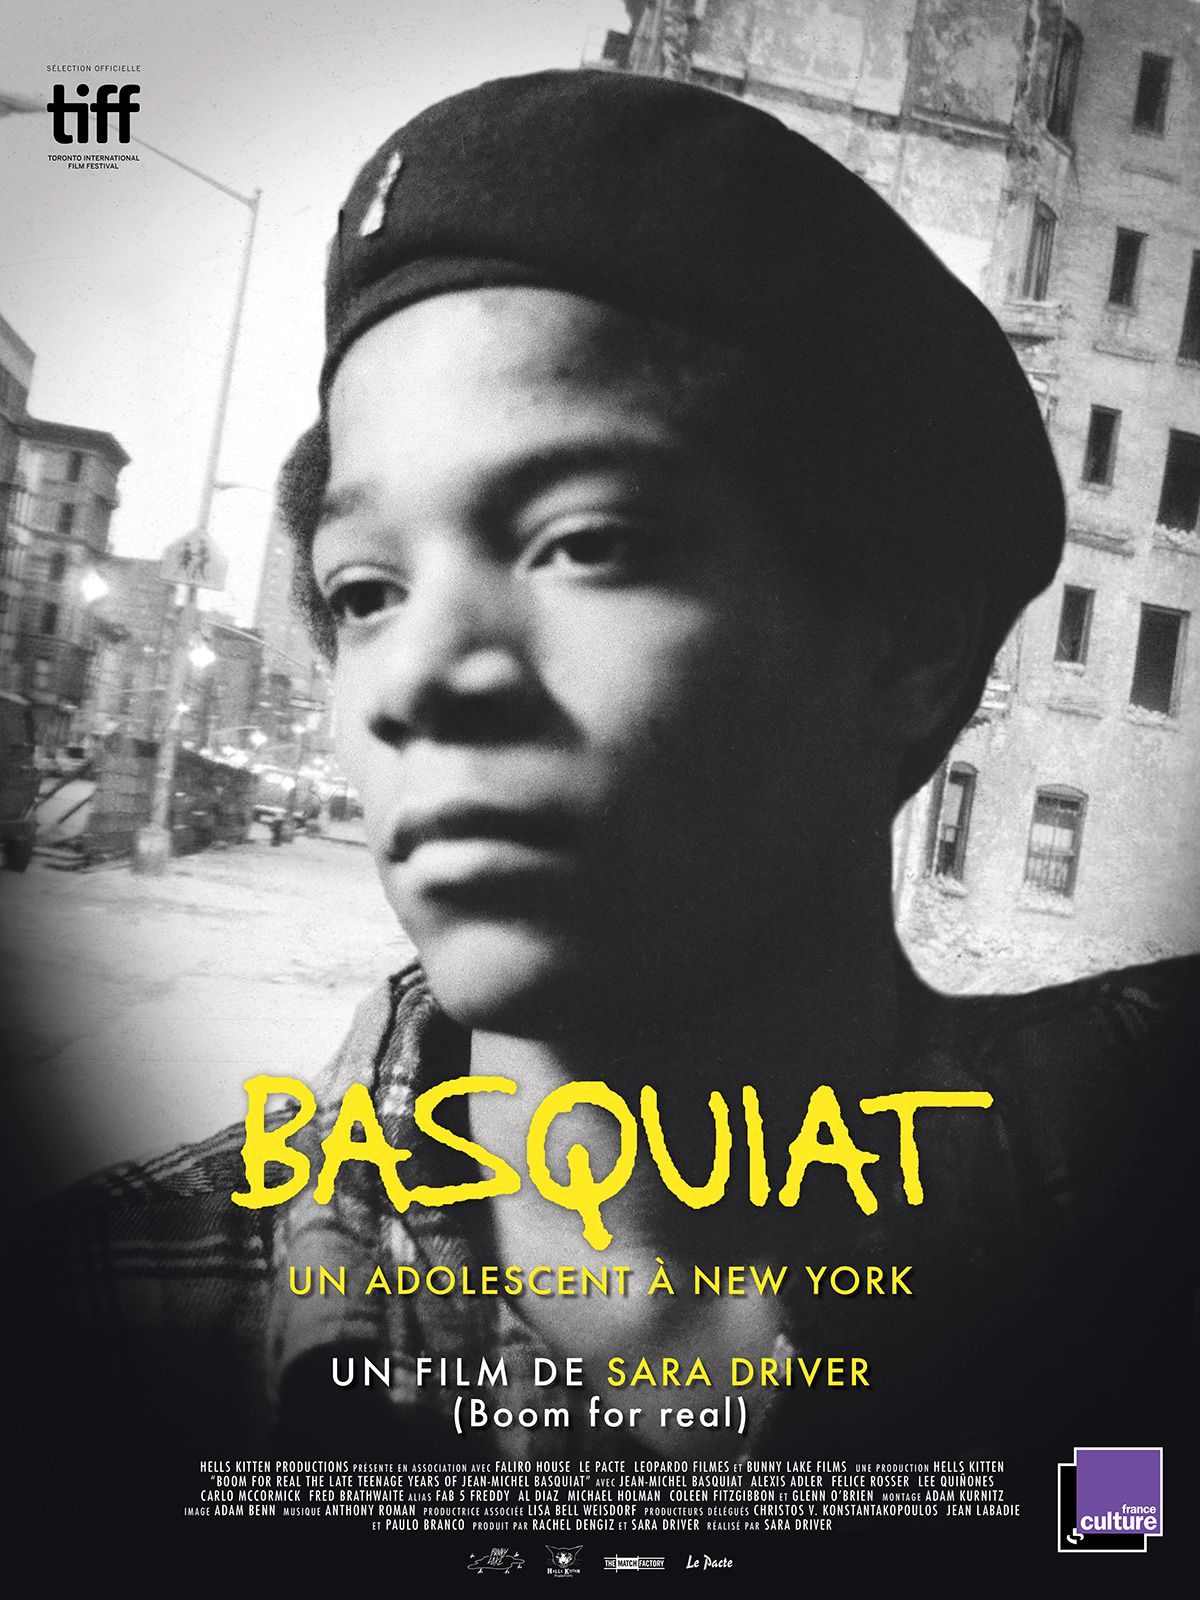 Basquiat - Un adolescent à New York - Documentaire (2018) streaming VF gratuit complet